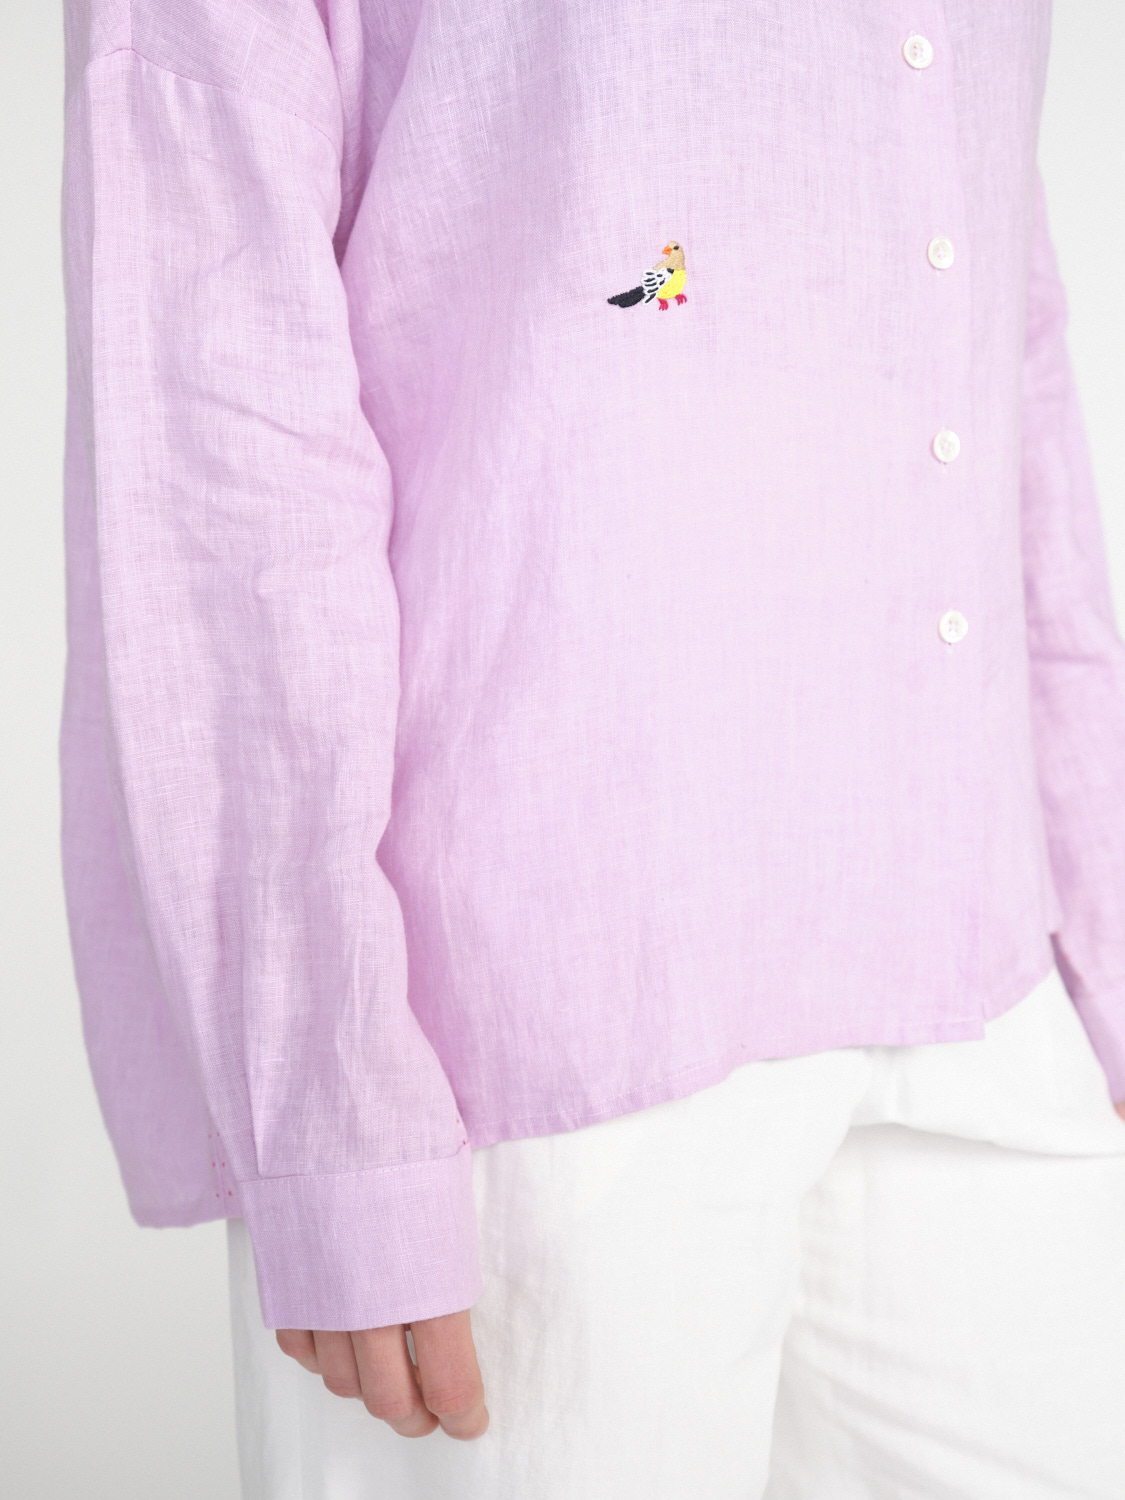 an an londree Summer – Leinen-Bluse mit verspielten Details   rosa S